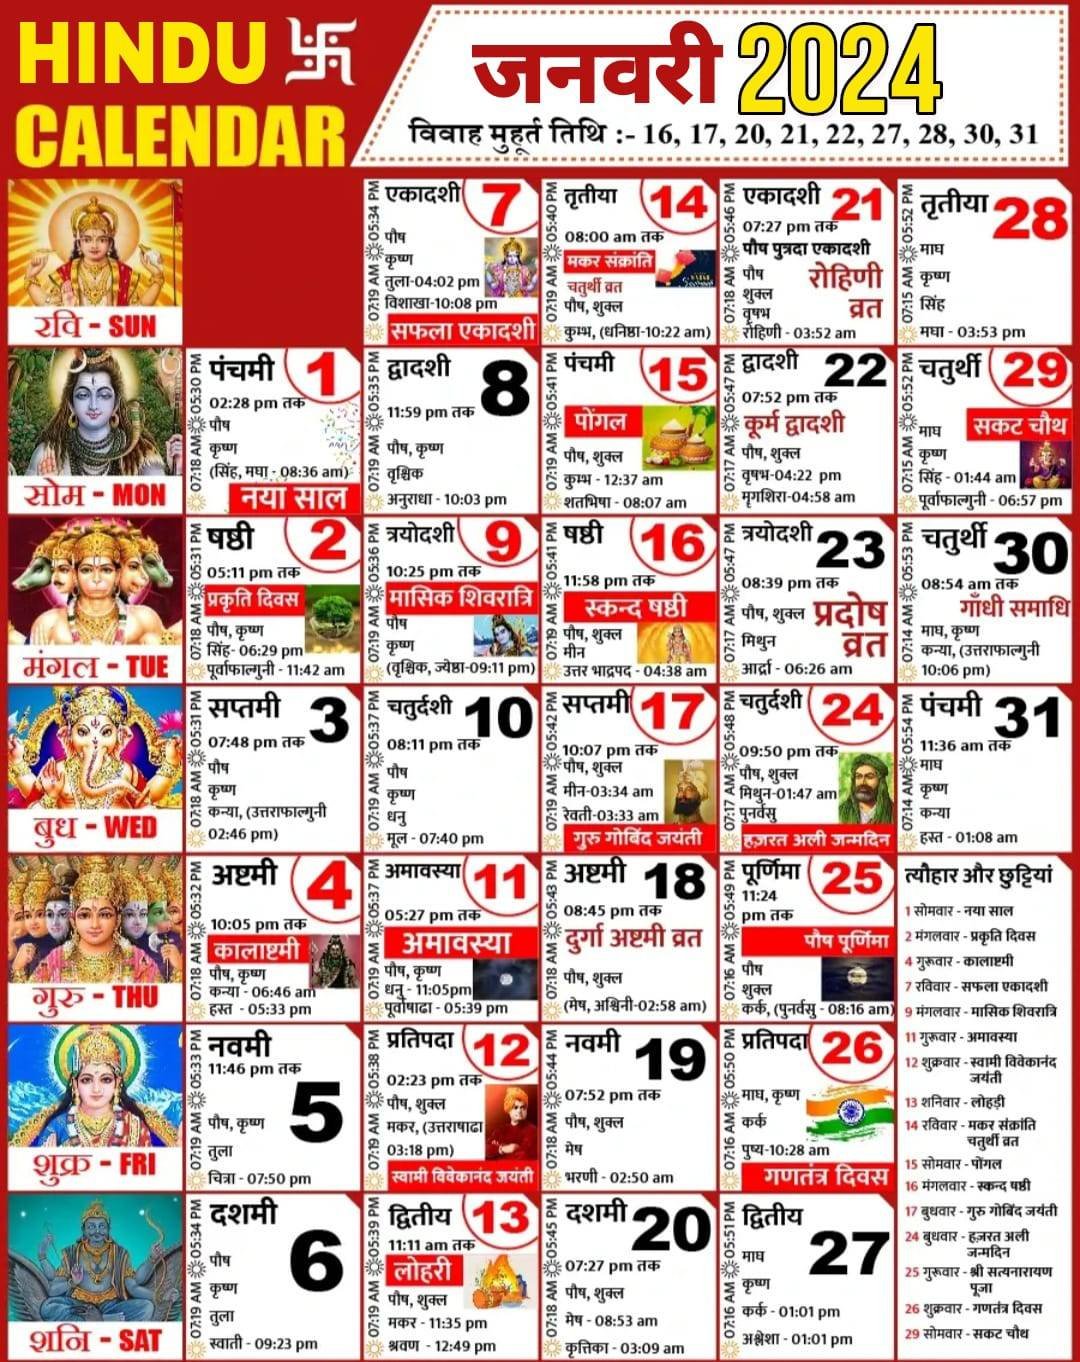 thakur-prasad-calendar-2024-january-hindu-calendar-2024-pdf